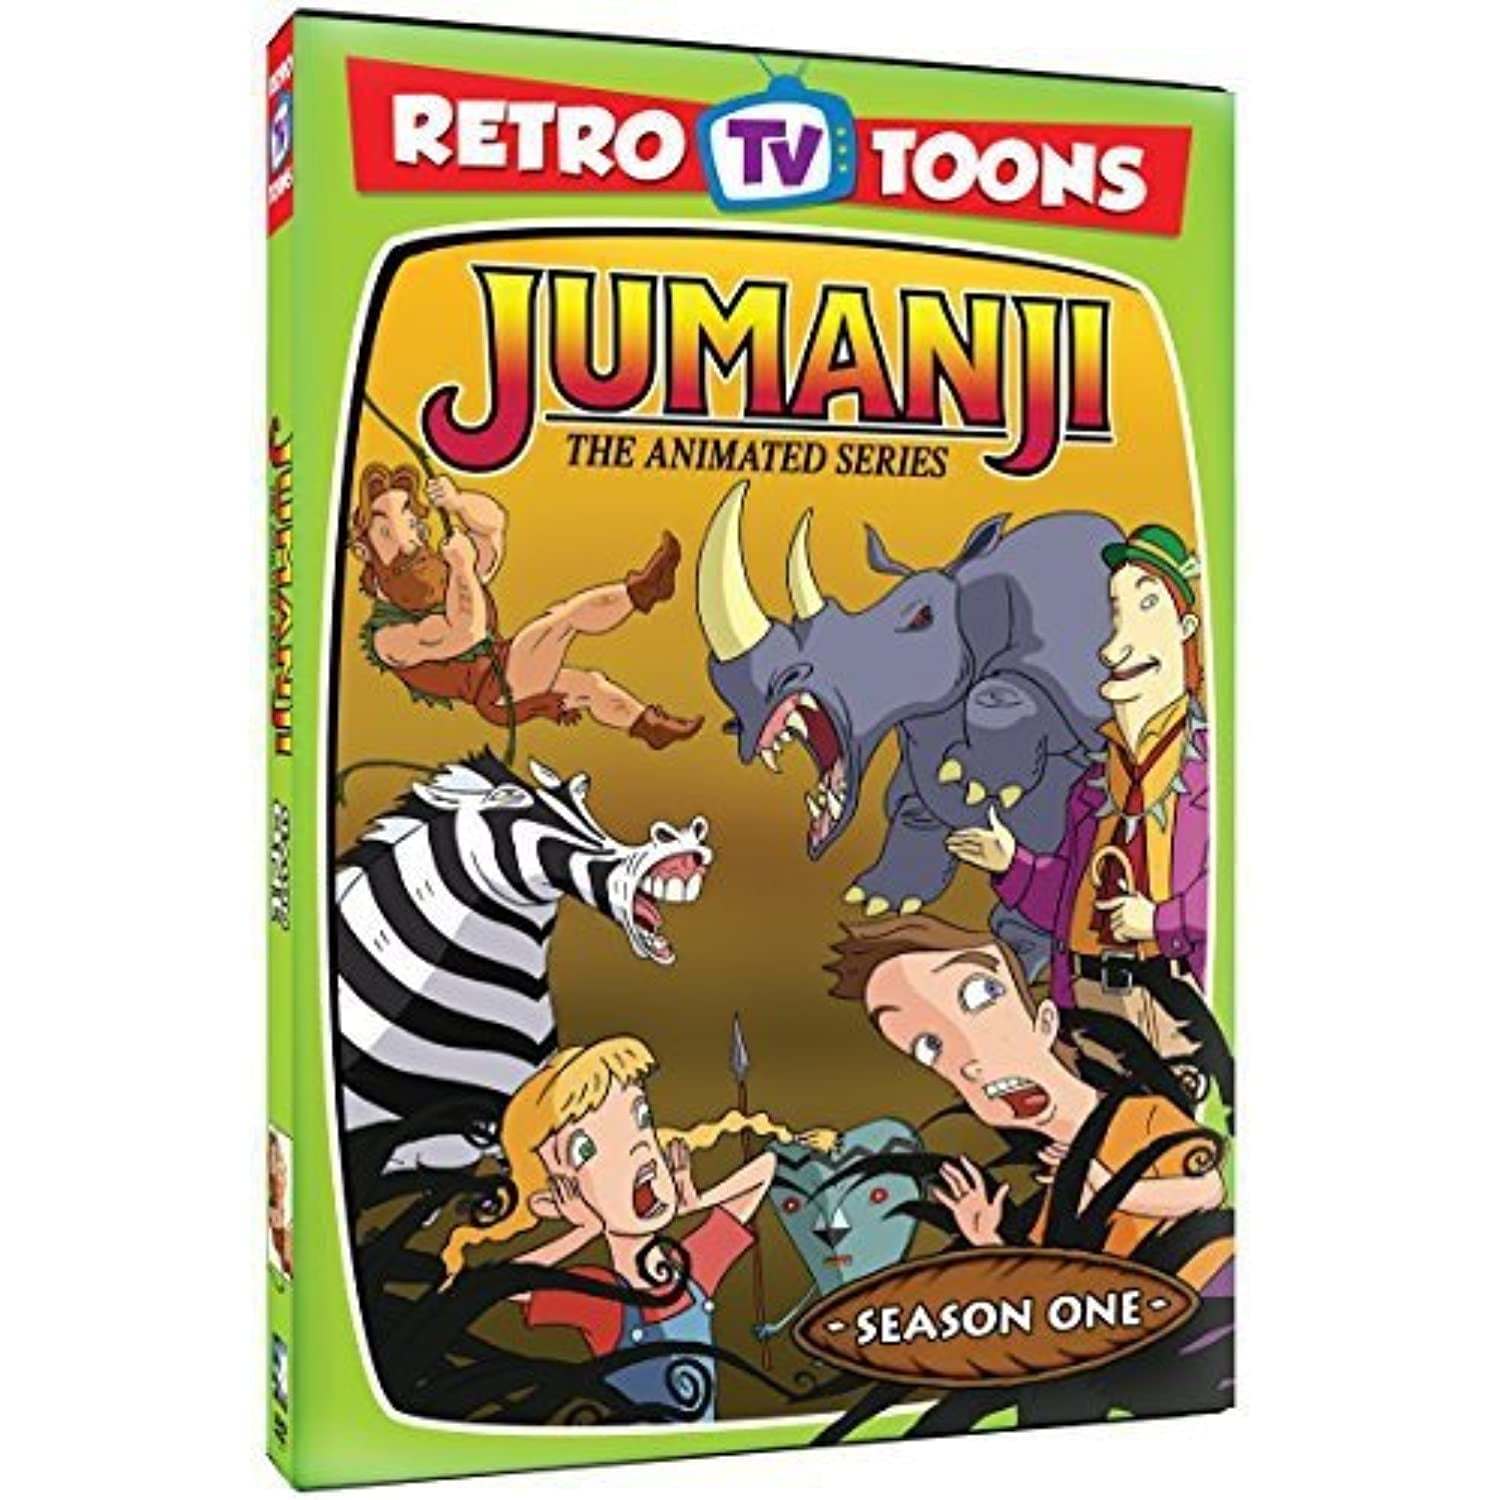 Retro Tv Toons - Jumanji - The Animated Series - Season 1 